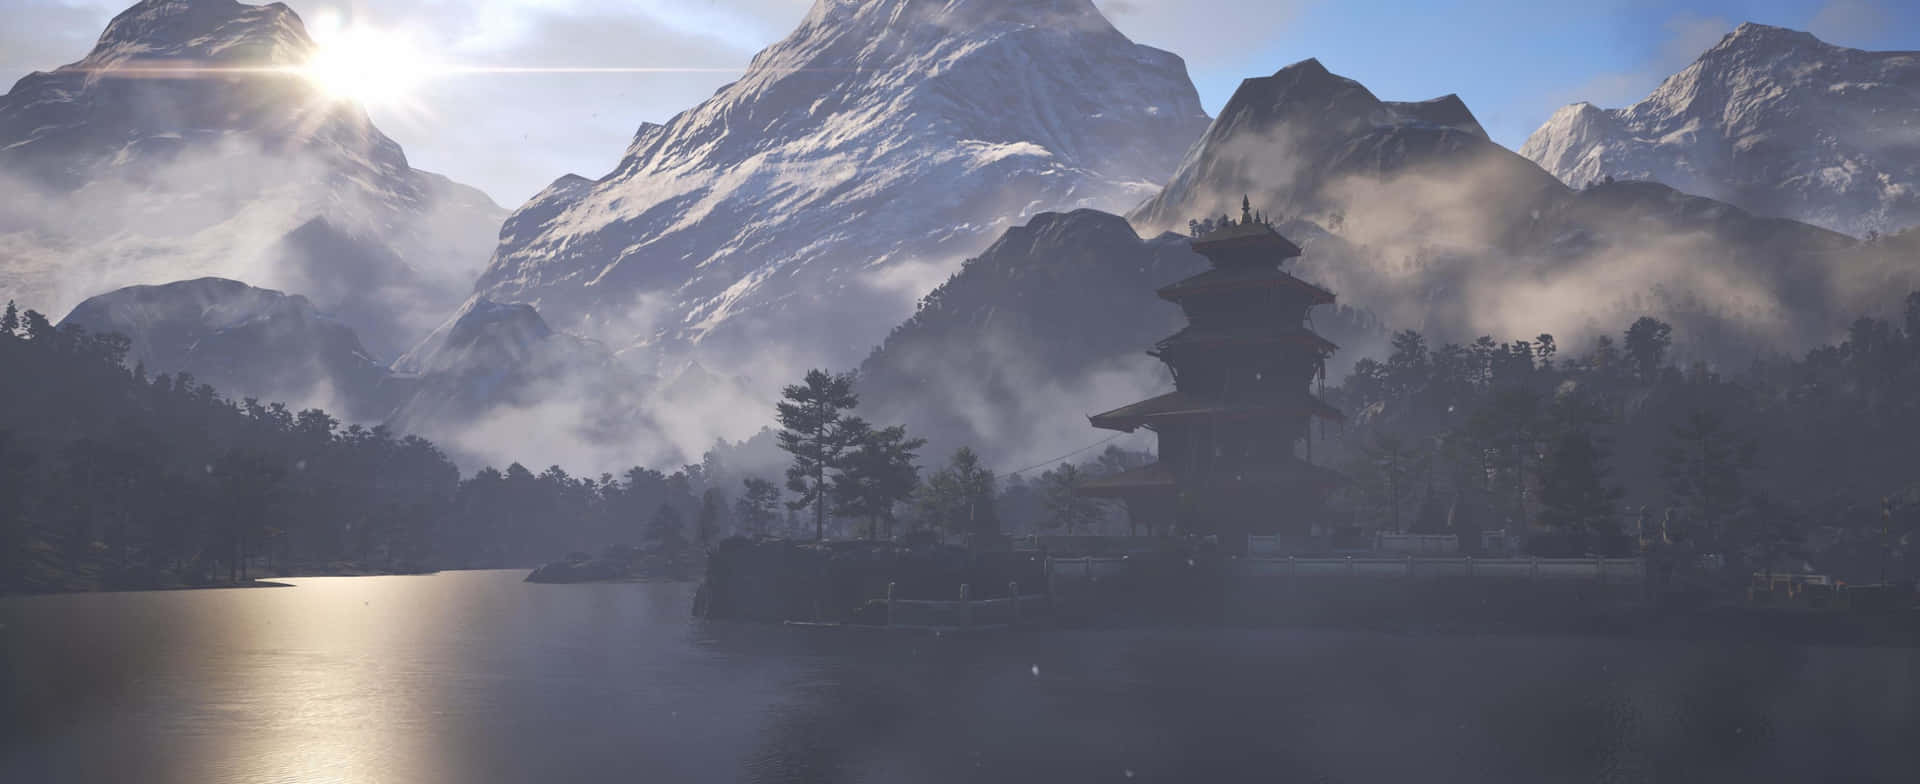 En bjergscene med et pagodetag og en sø